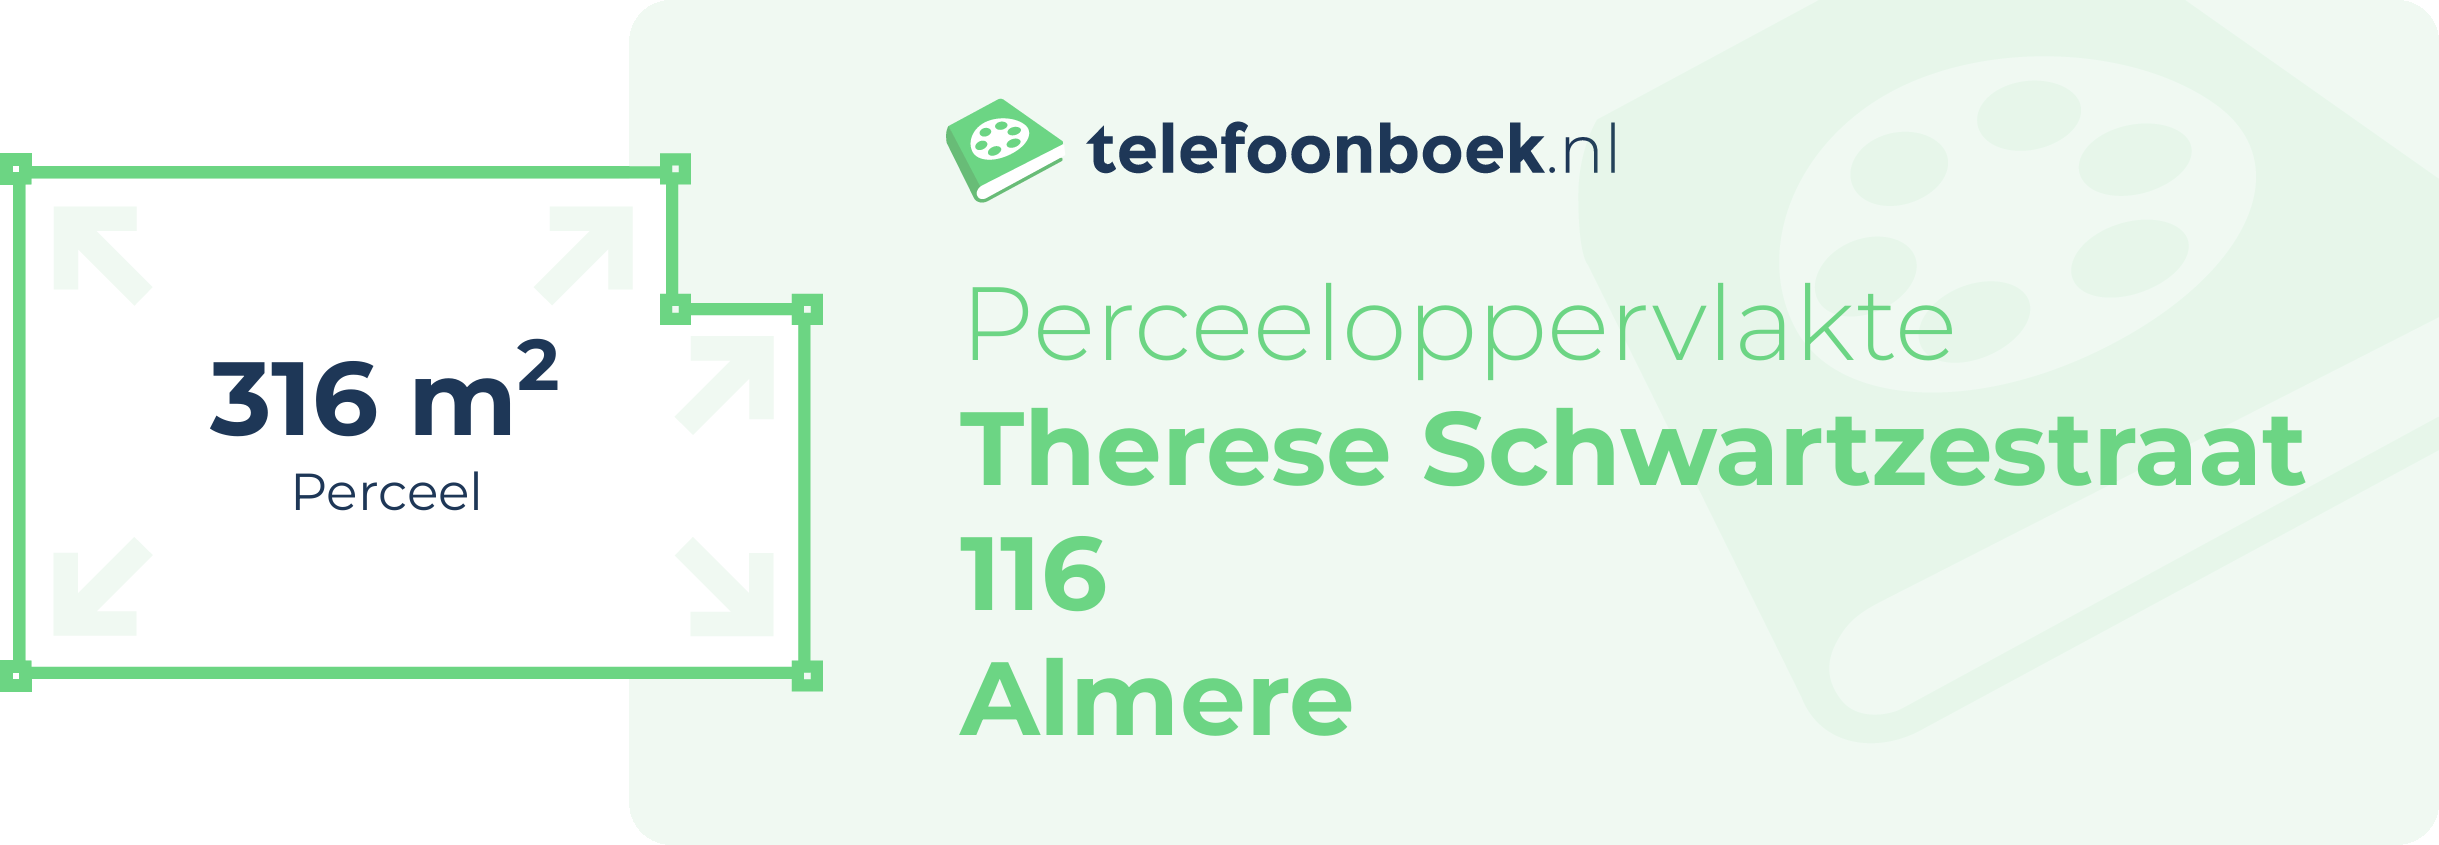 Perceeloppervlakte Therese Schwartzestraat 116 Almere